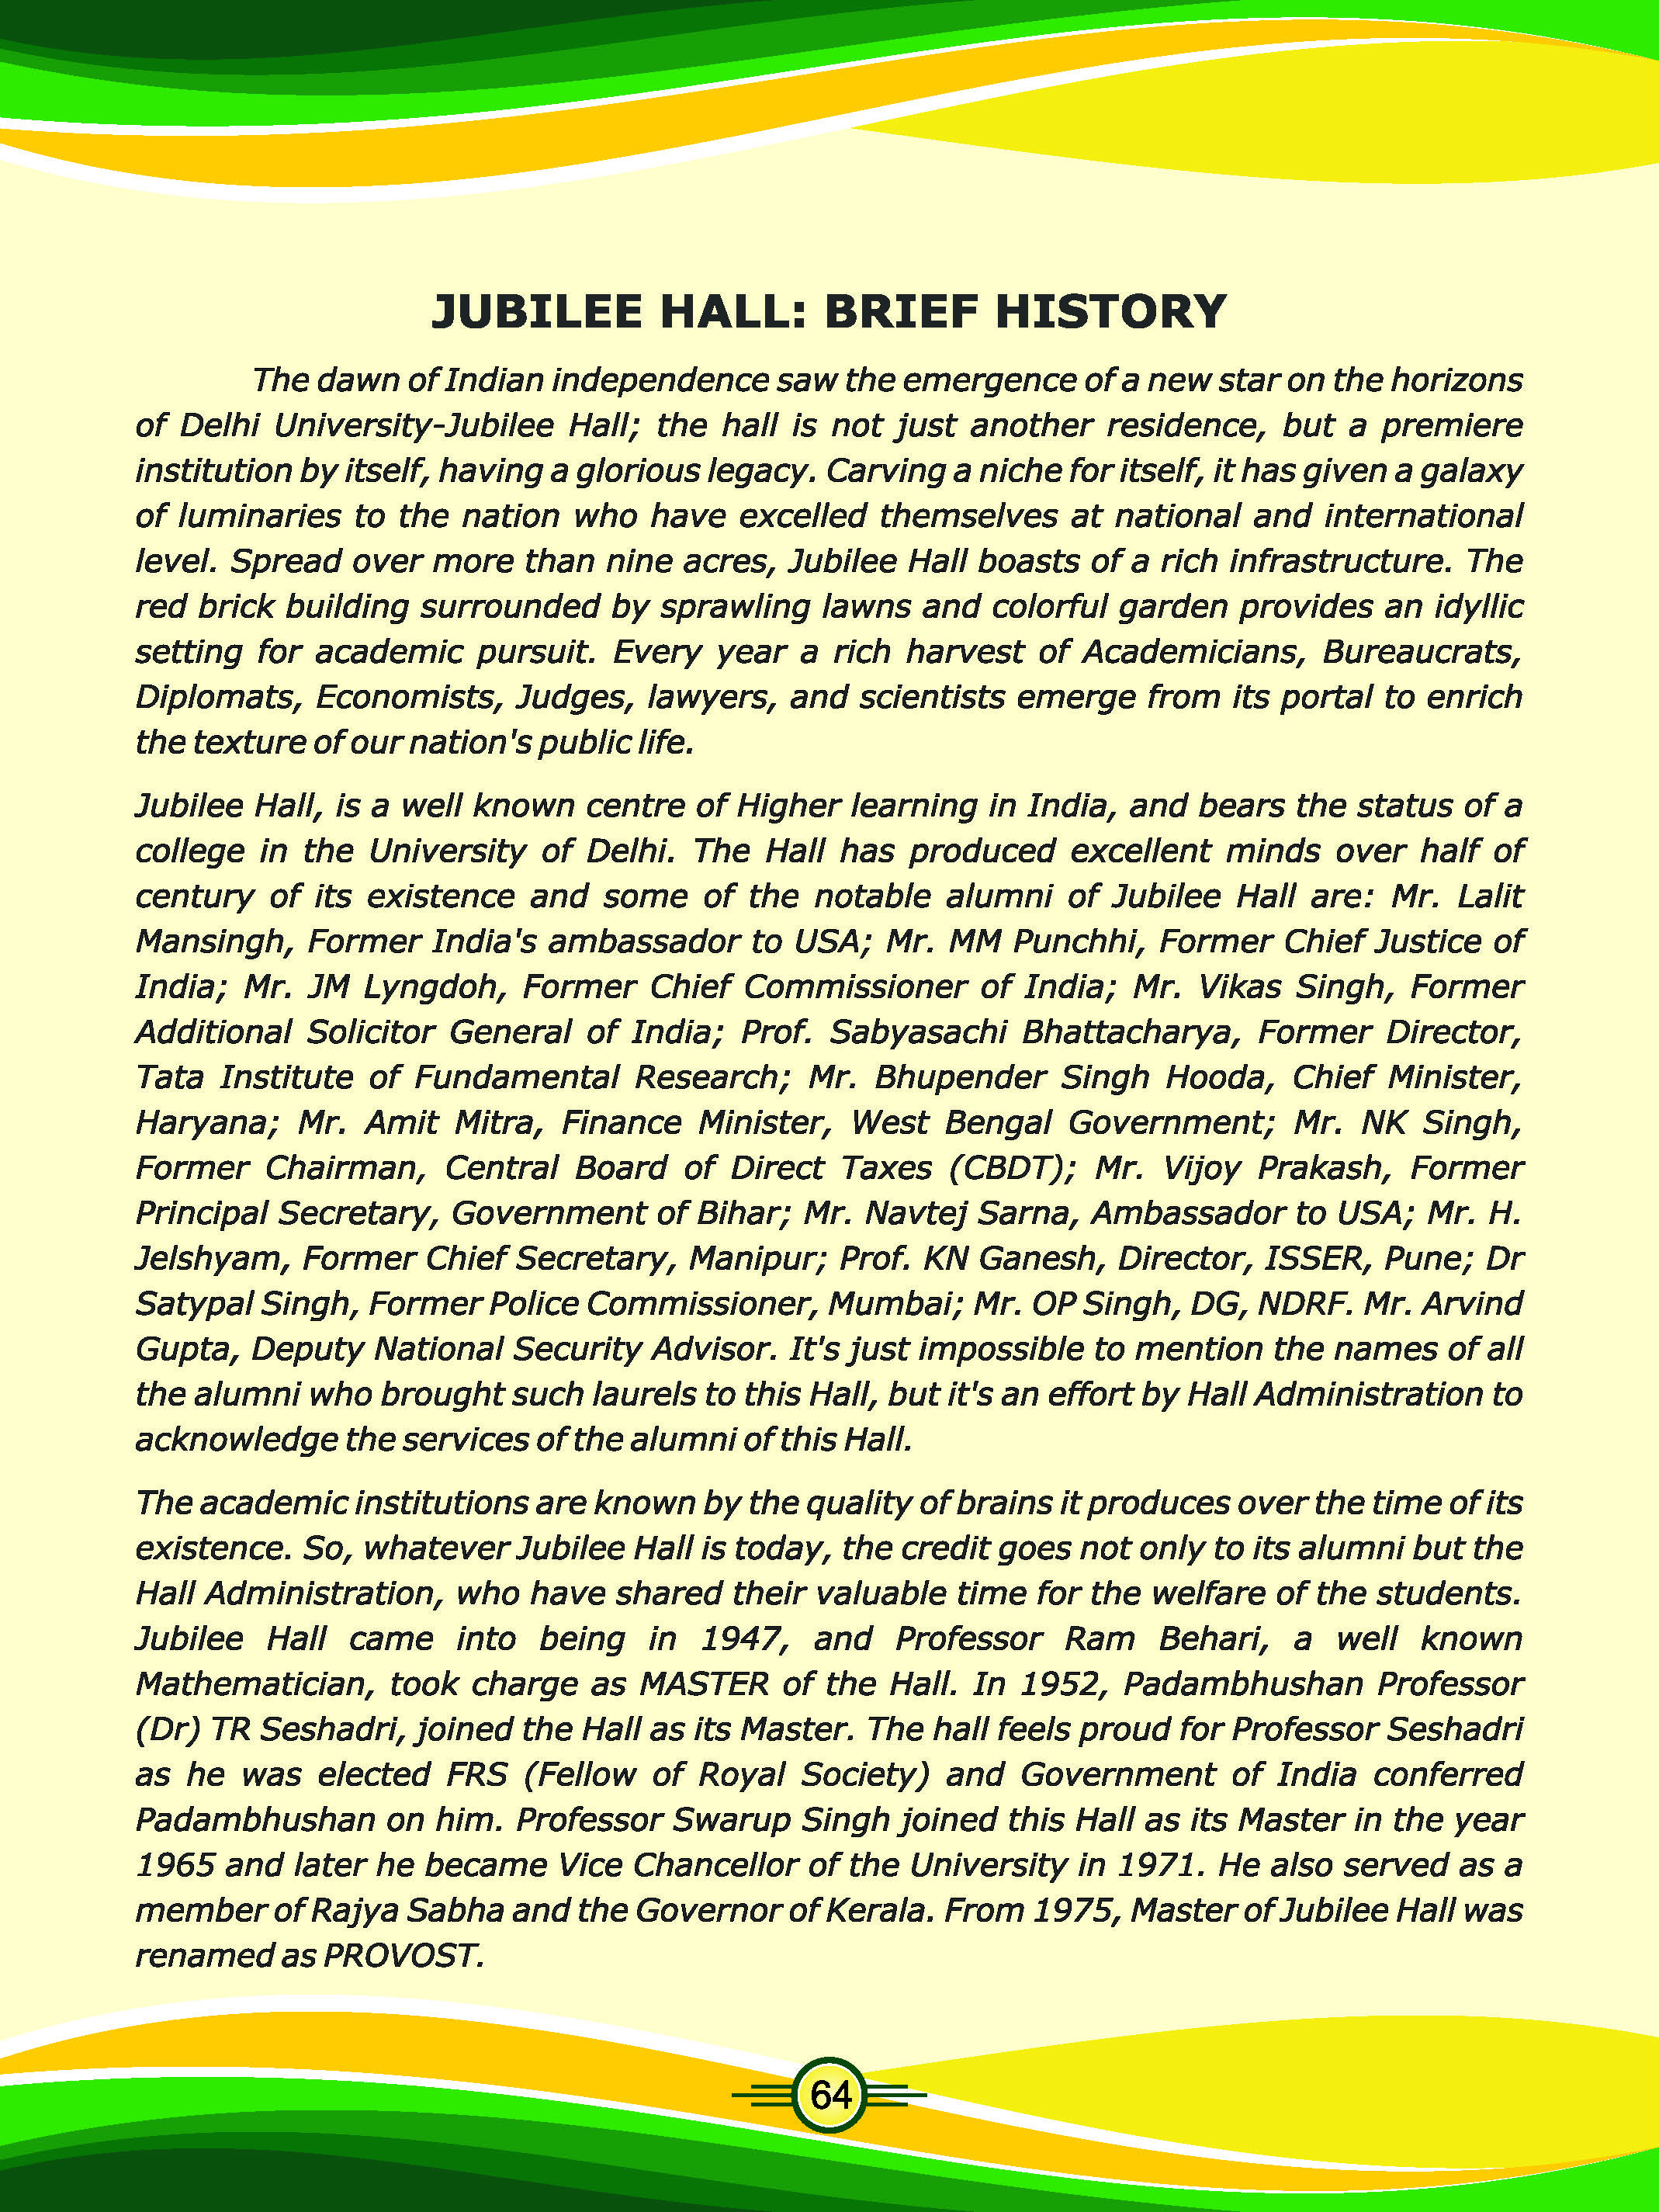 HB2324/JUBILEE HALL BOOK 23-24_Page_66 (1).jpg